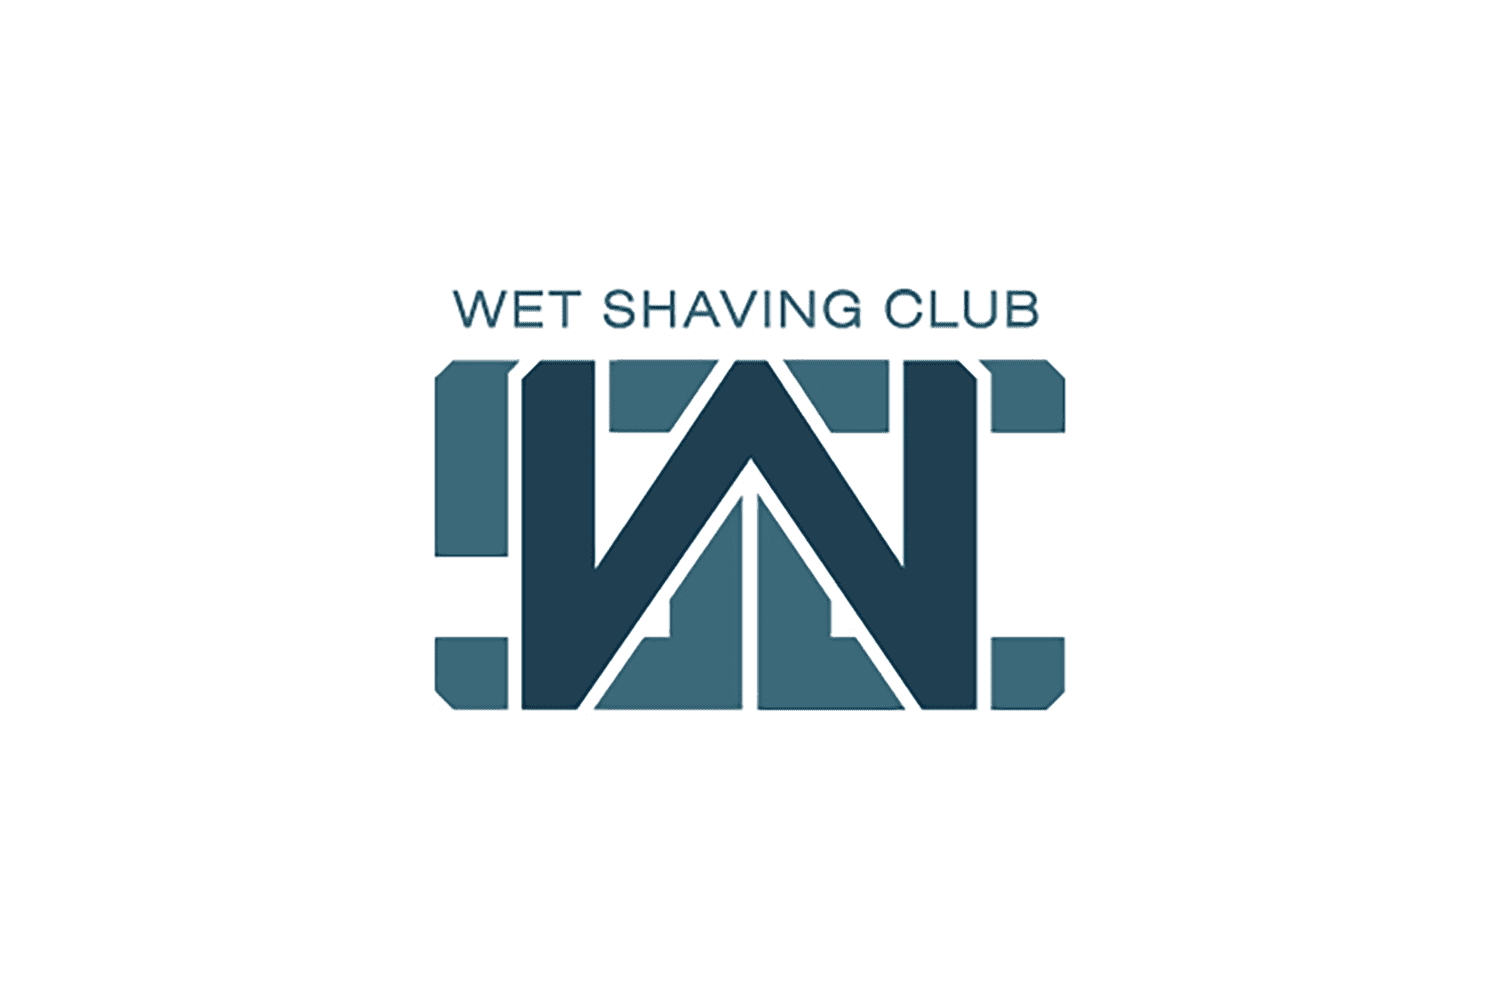 Clube de barbear molhado